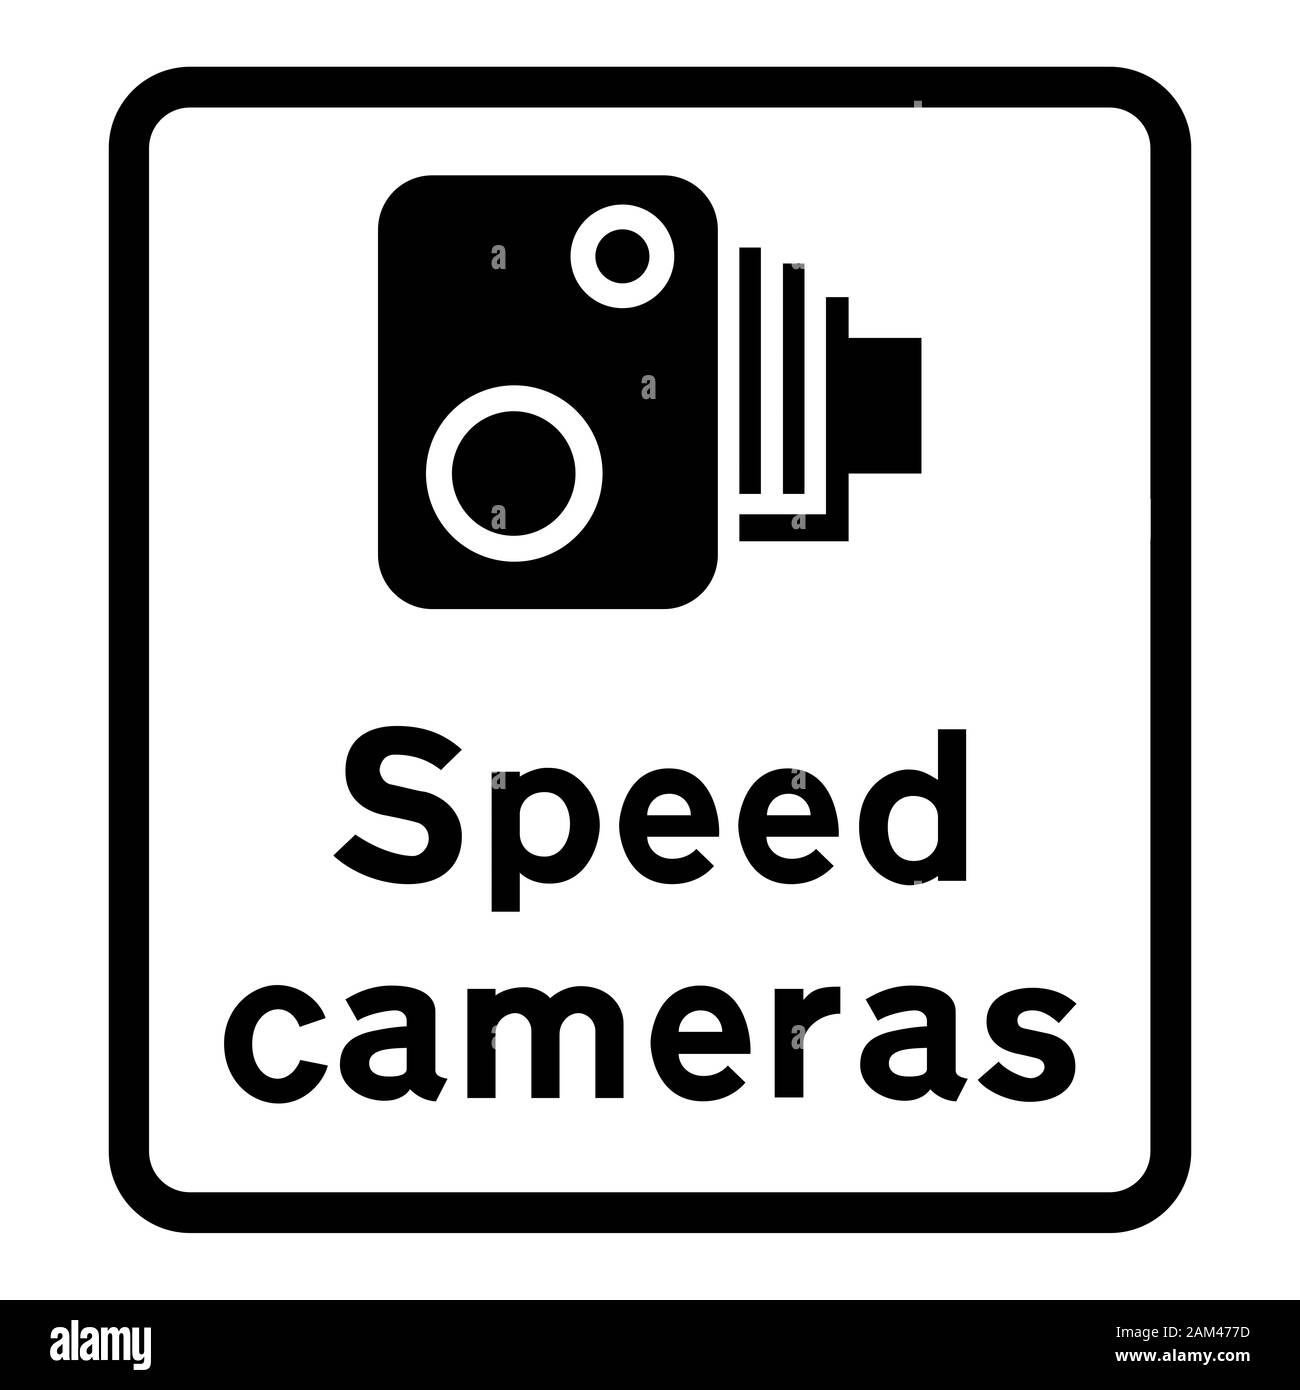 Speed camera symbol icon Stock Photo